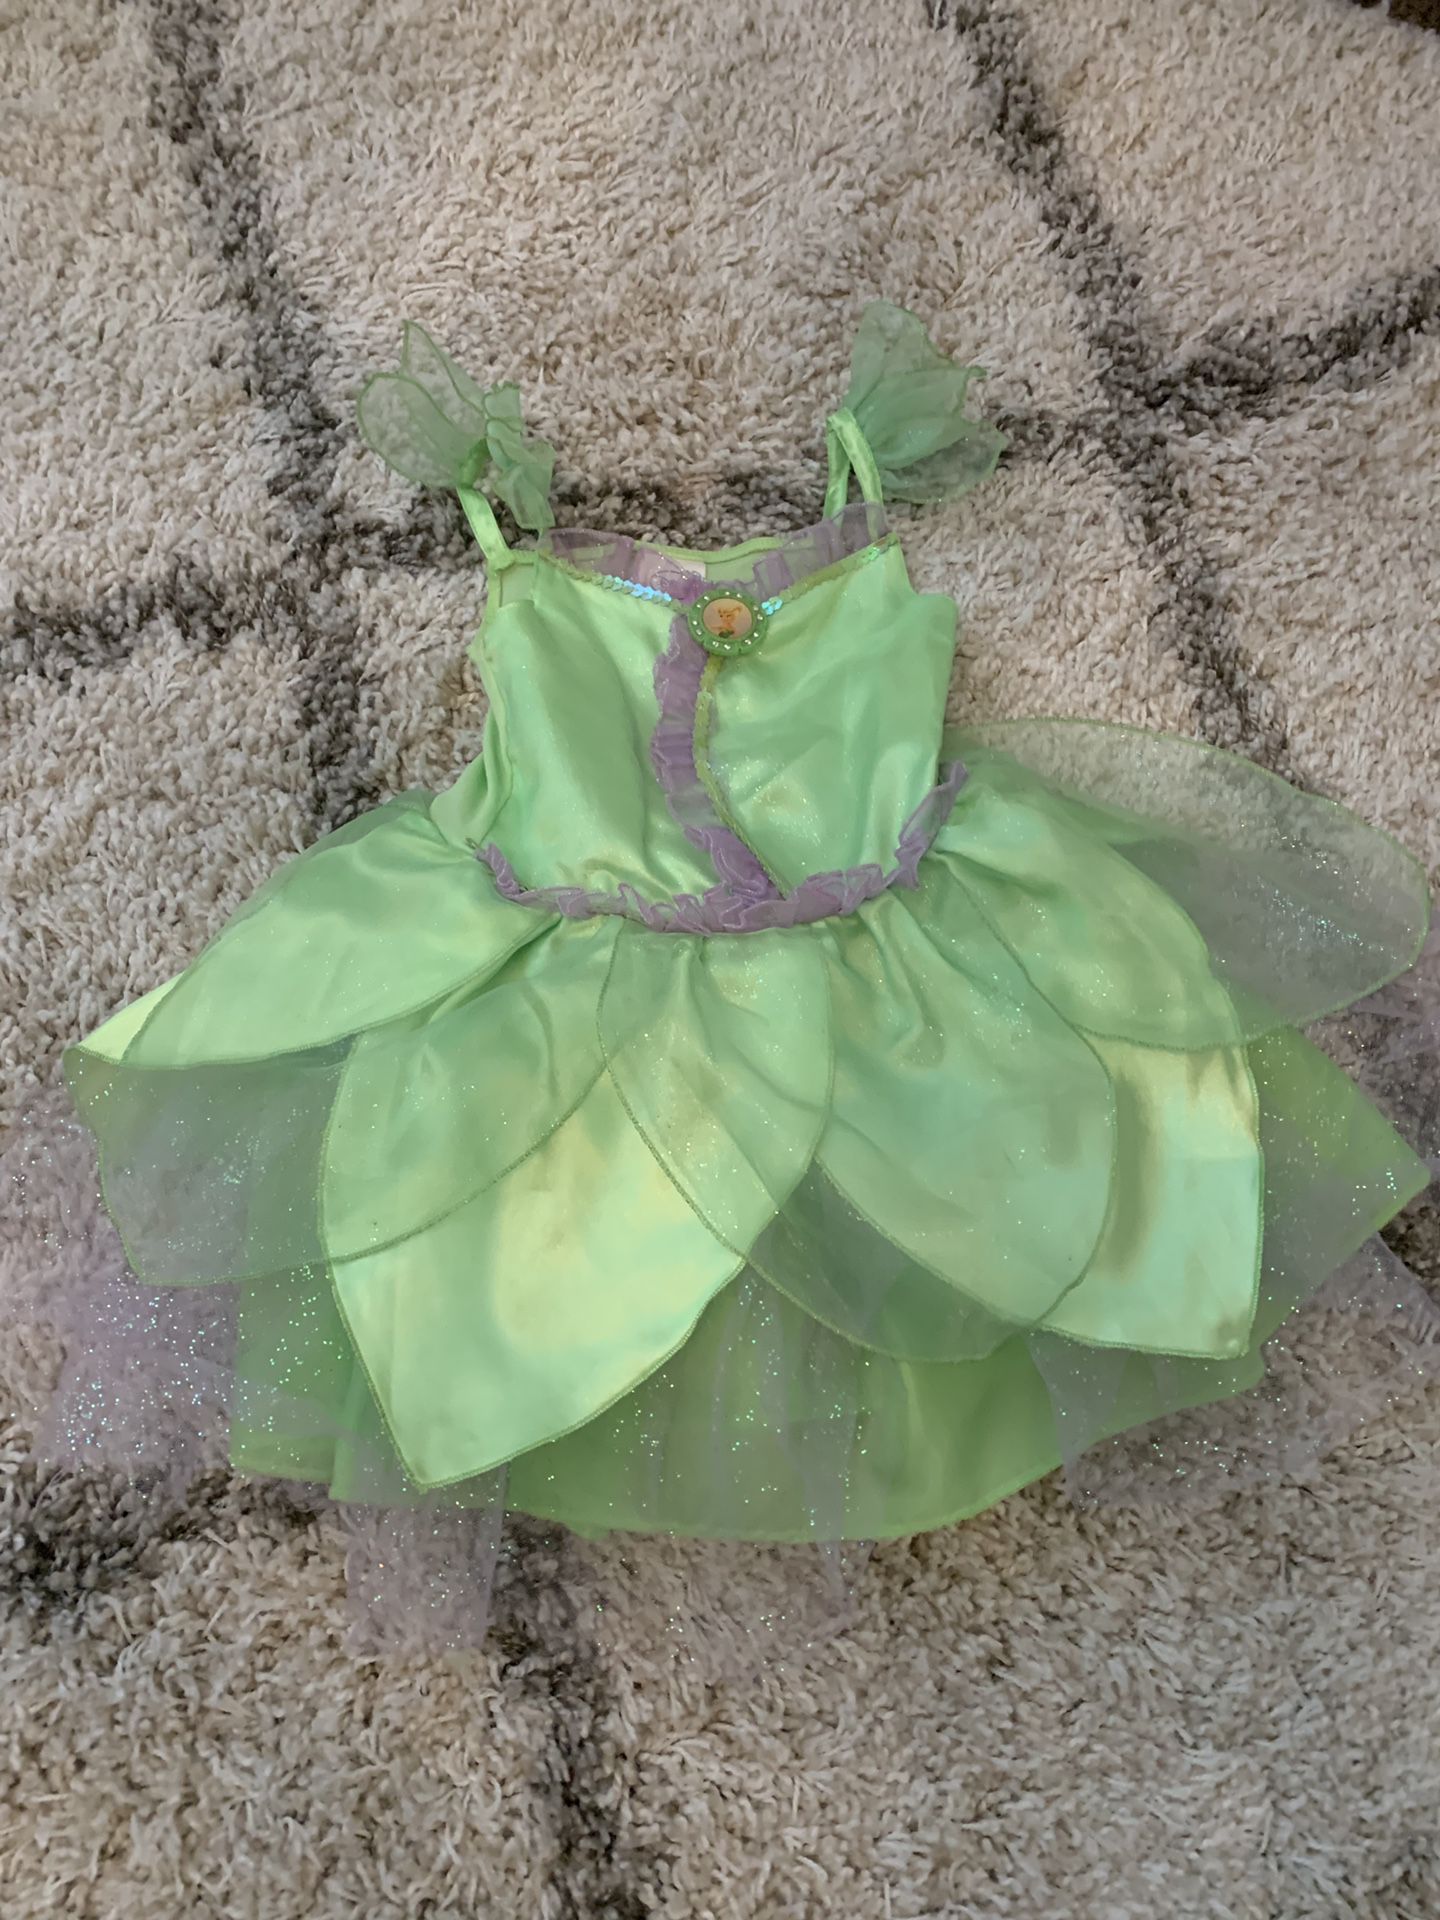 Tinkerbell costume